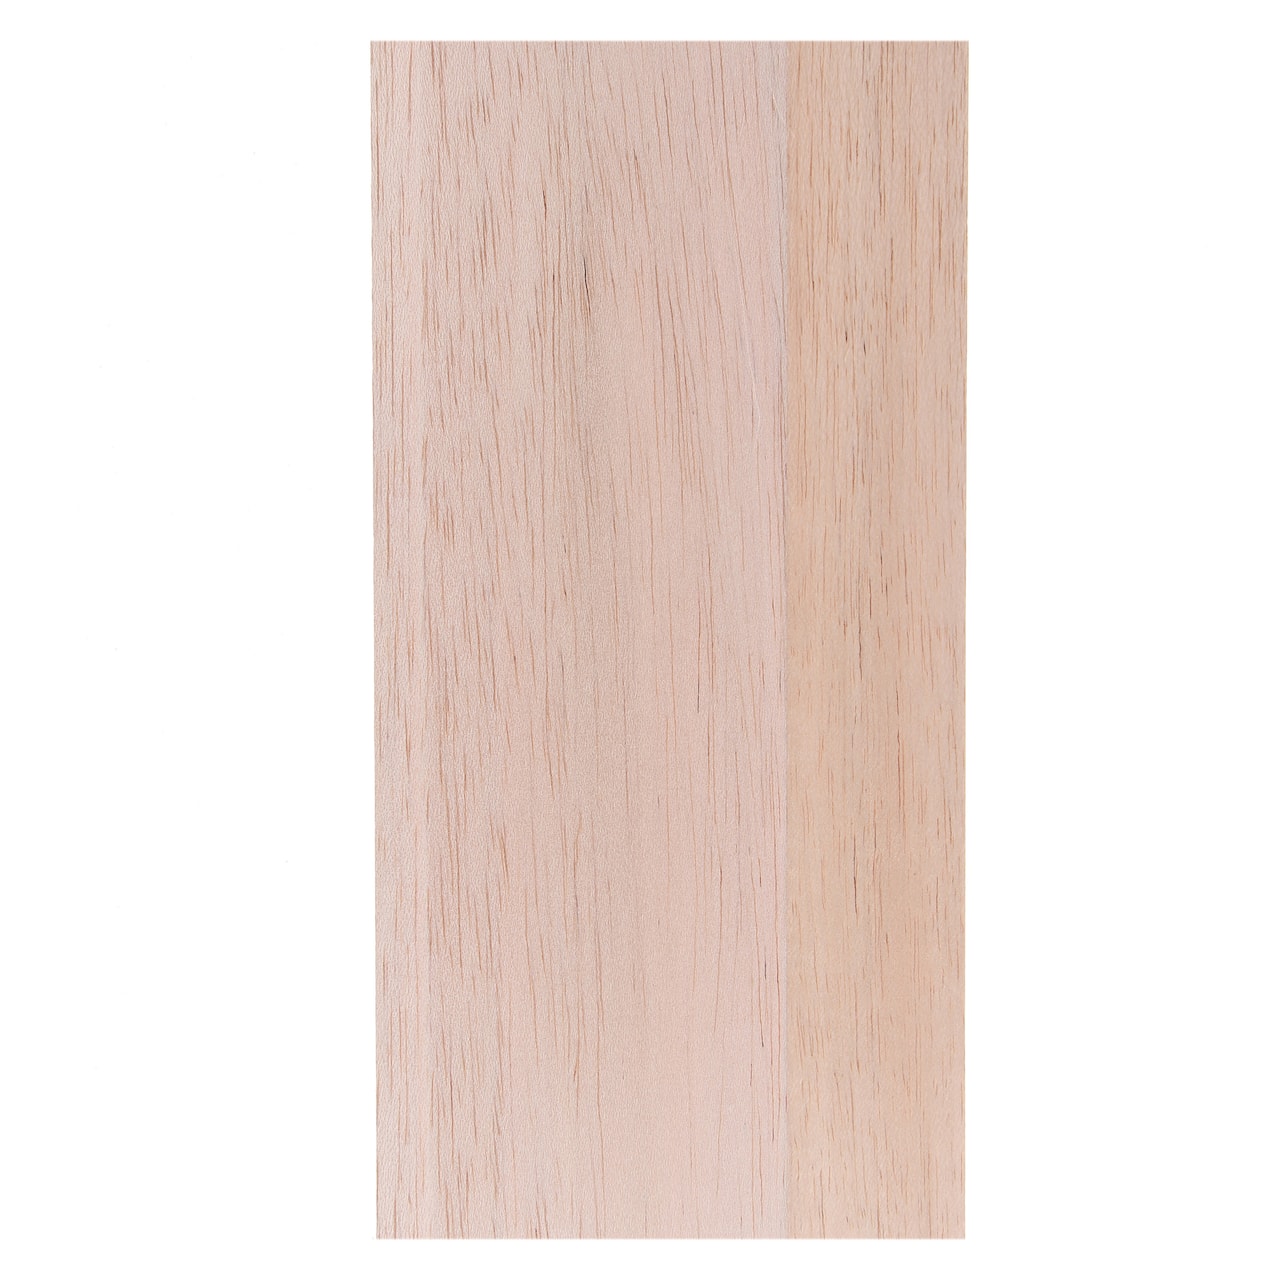 Balsa Wood Surface by Make Market®